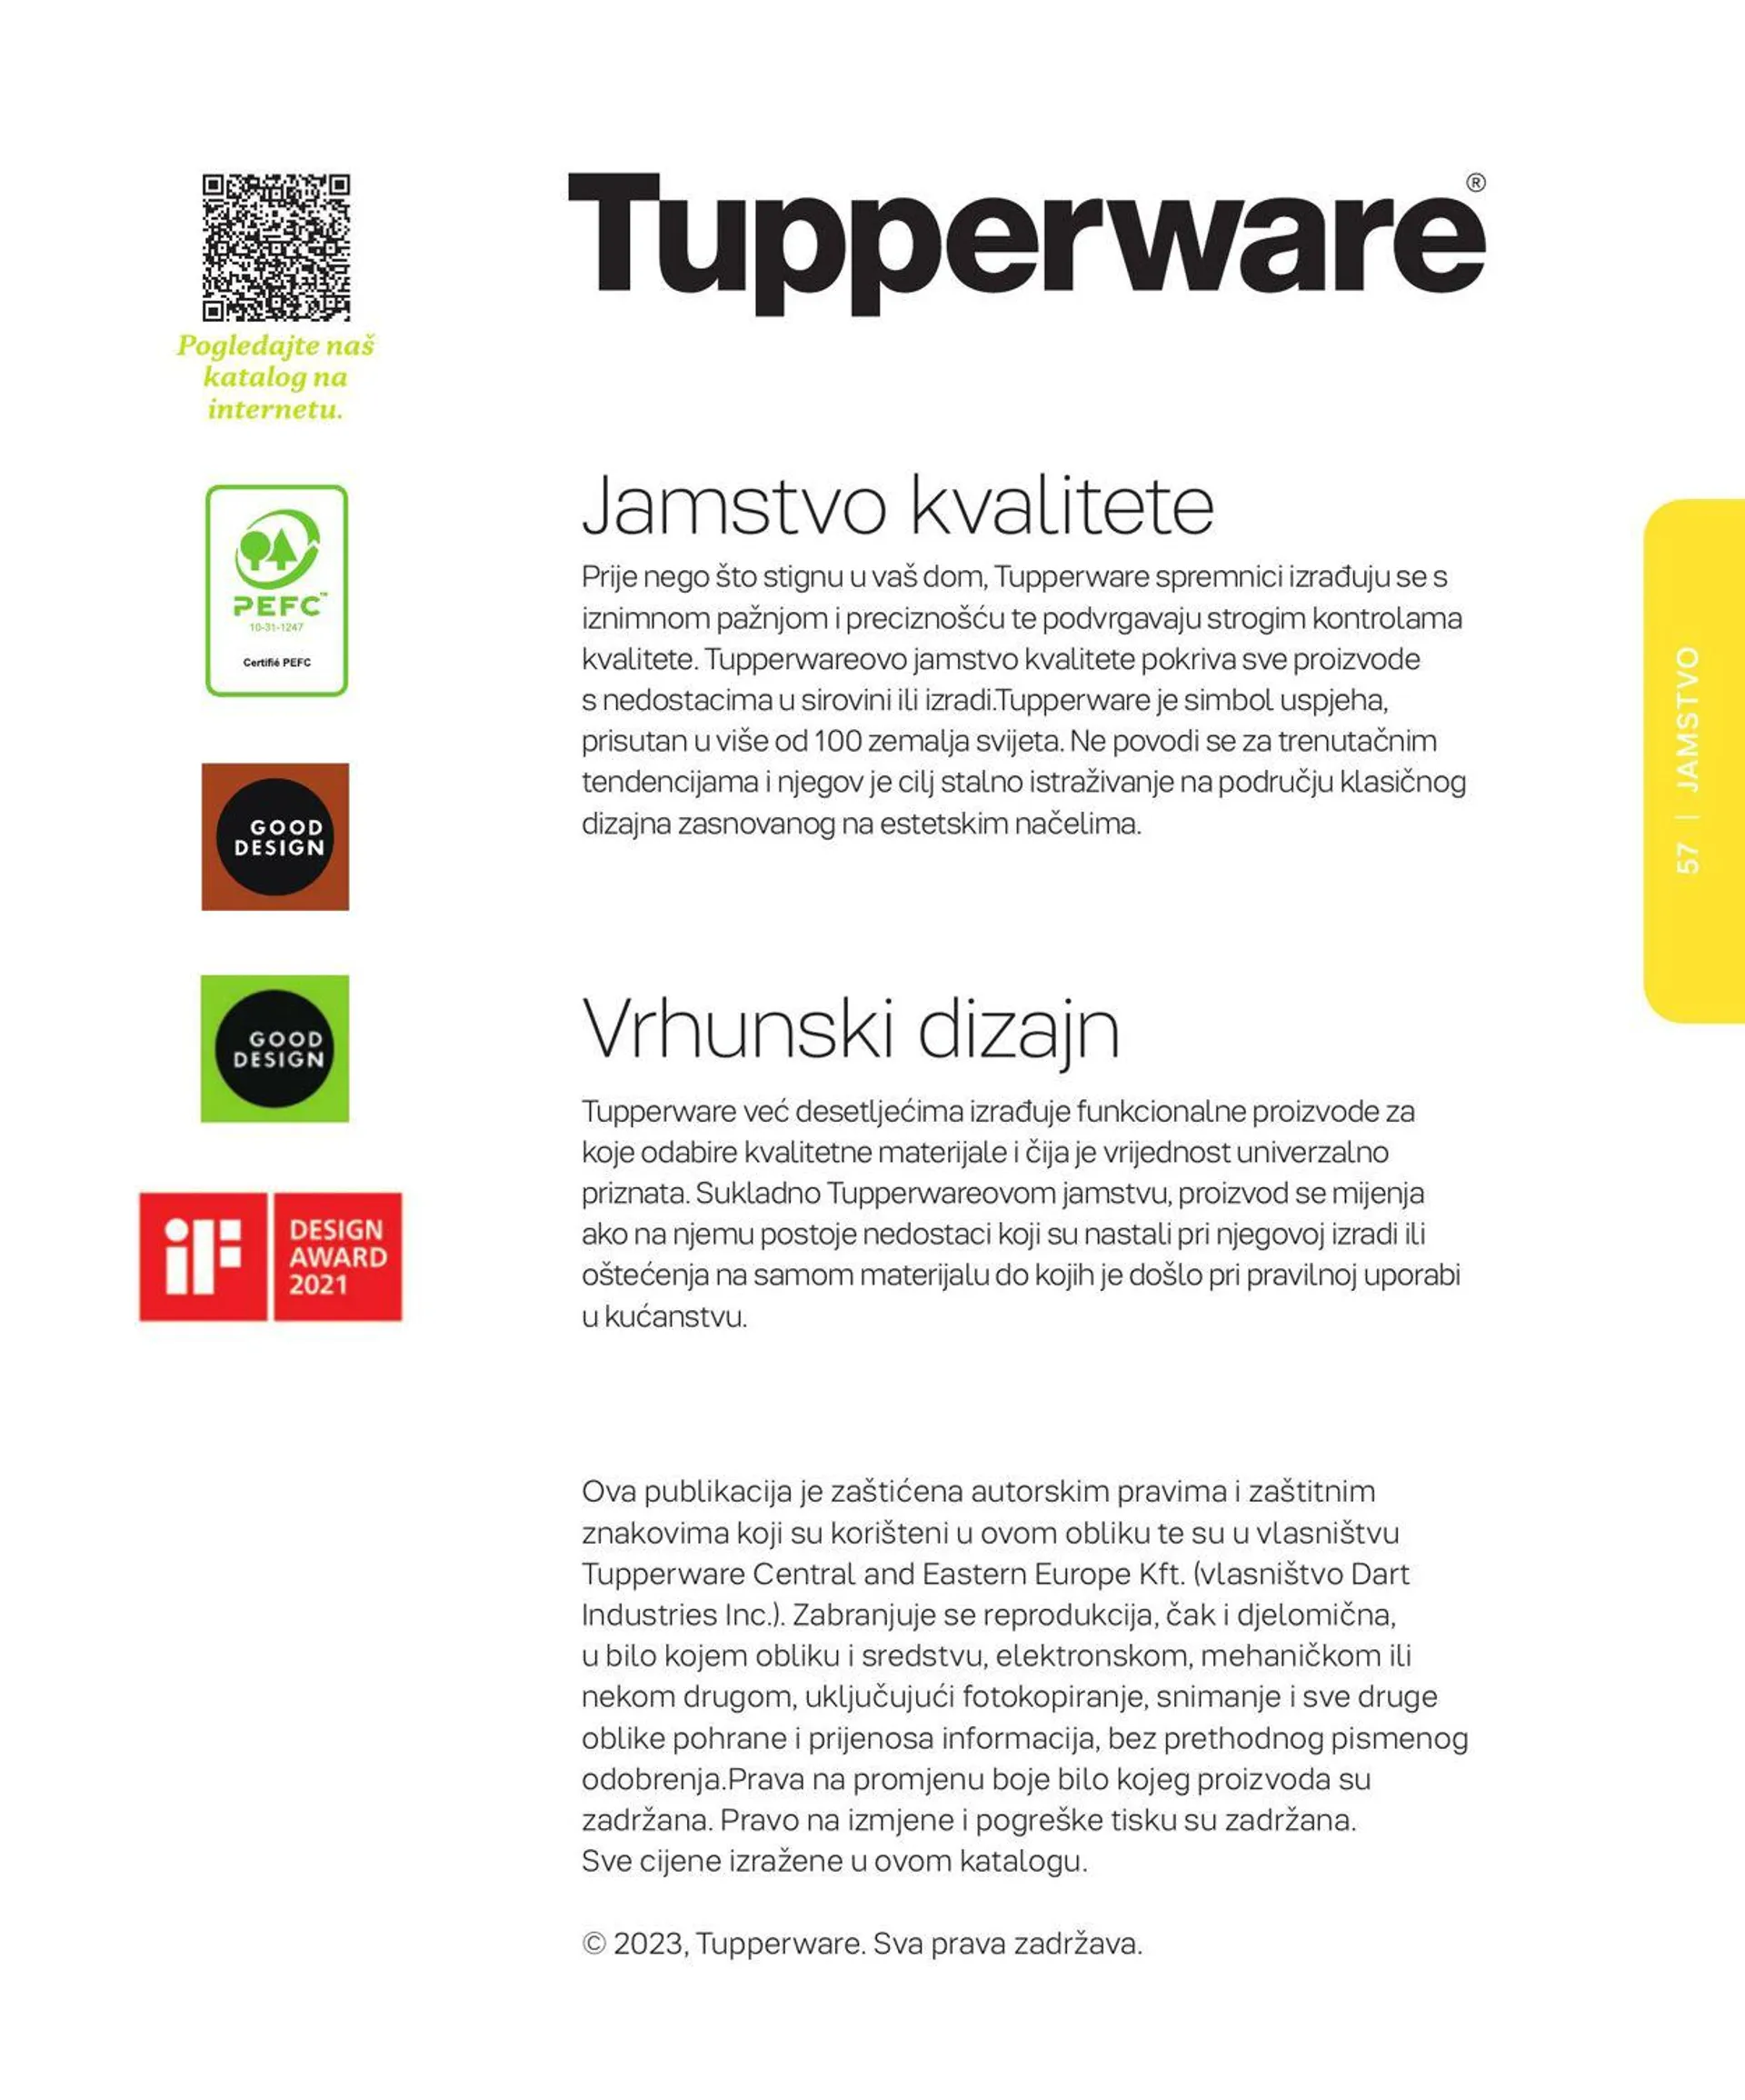 Tupperware - 57